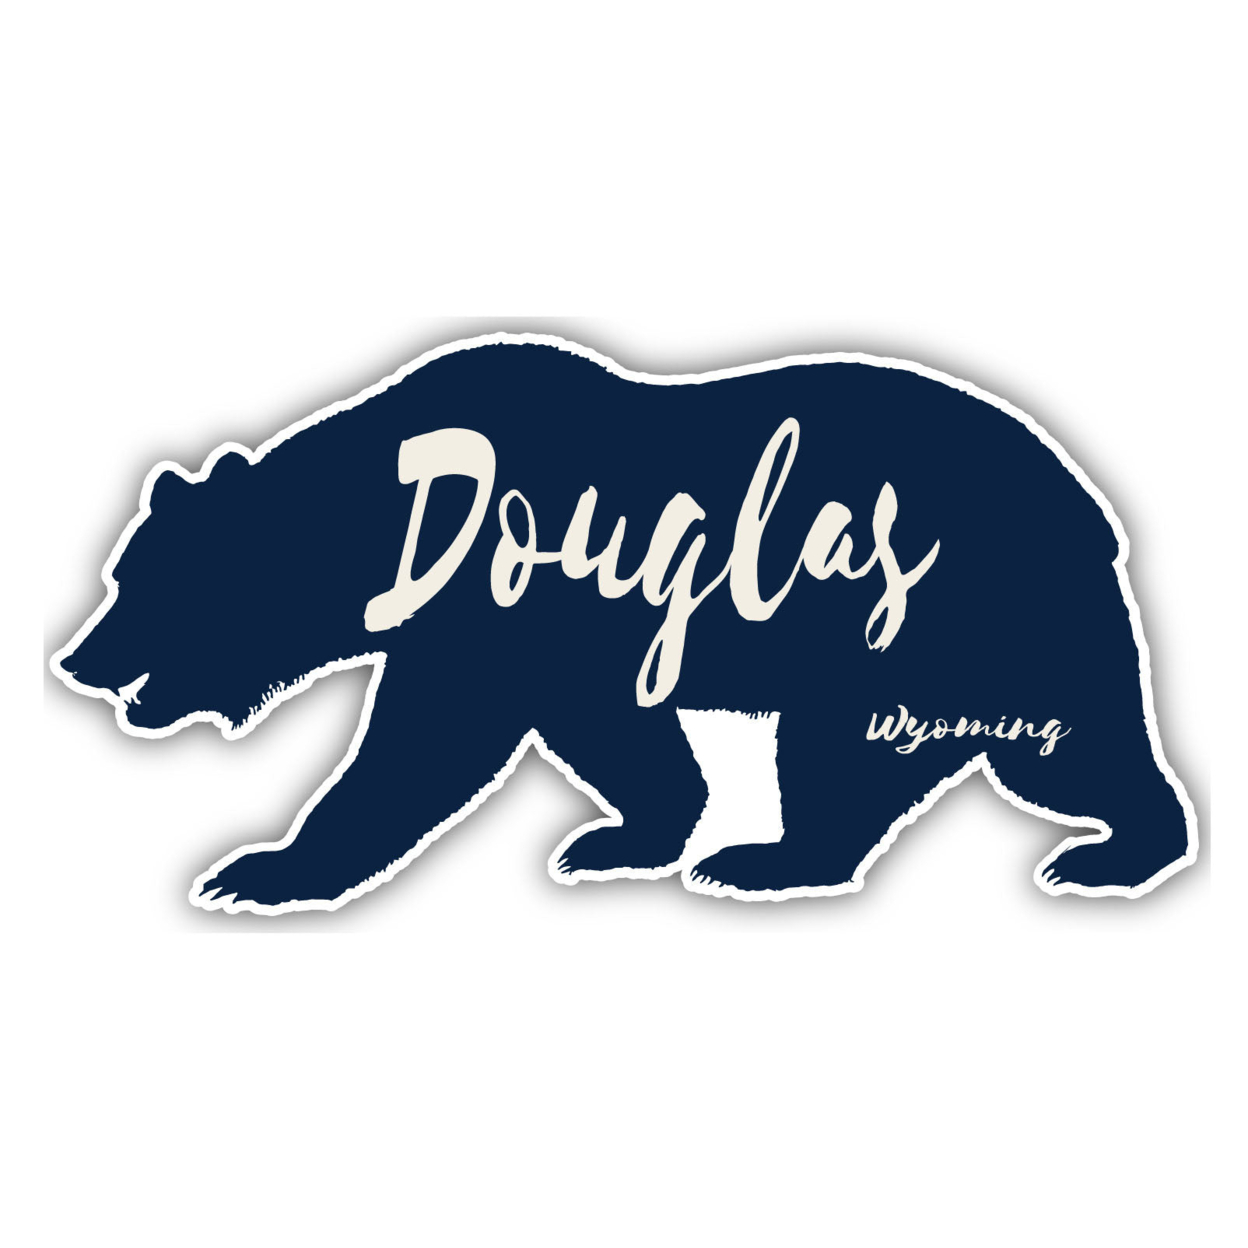 Douglas Wyoming Souvenir Decorative Stickers (Choose Theme And Size) - Single Unit, 6-Inch, Bear